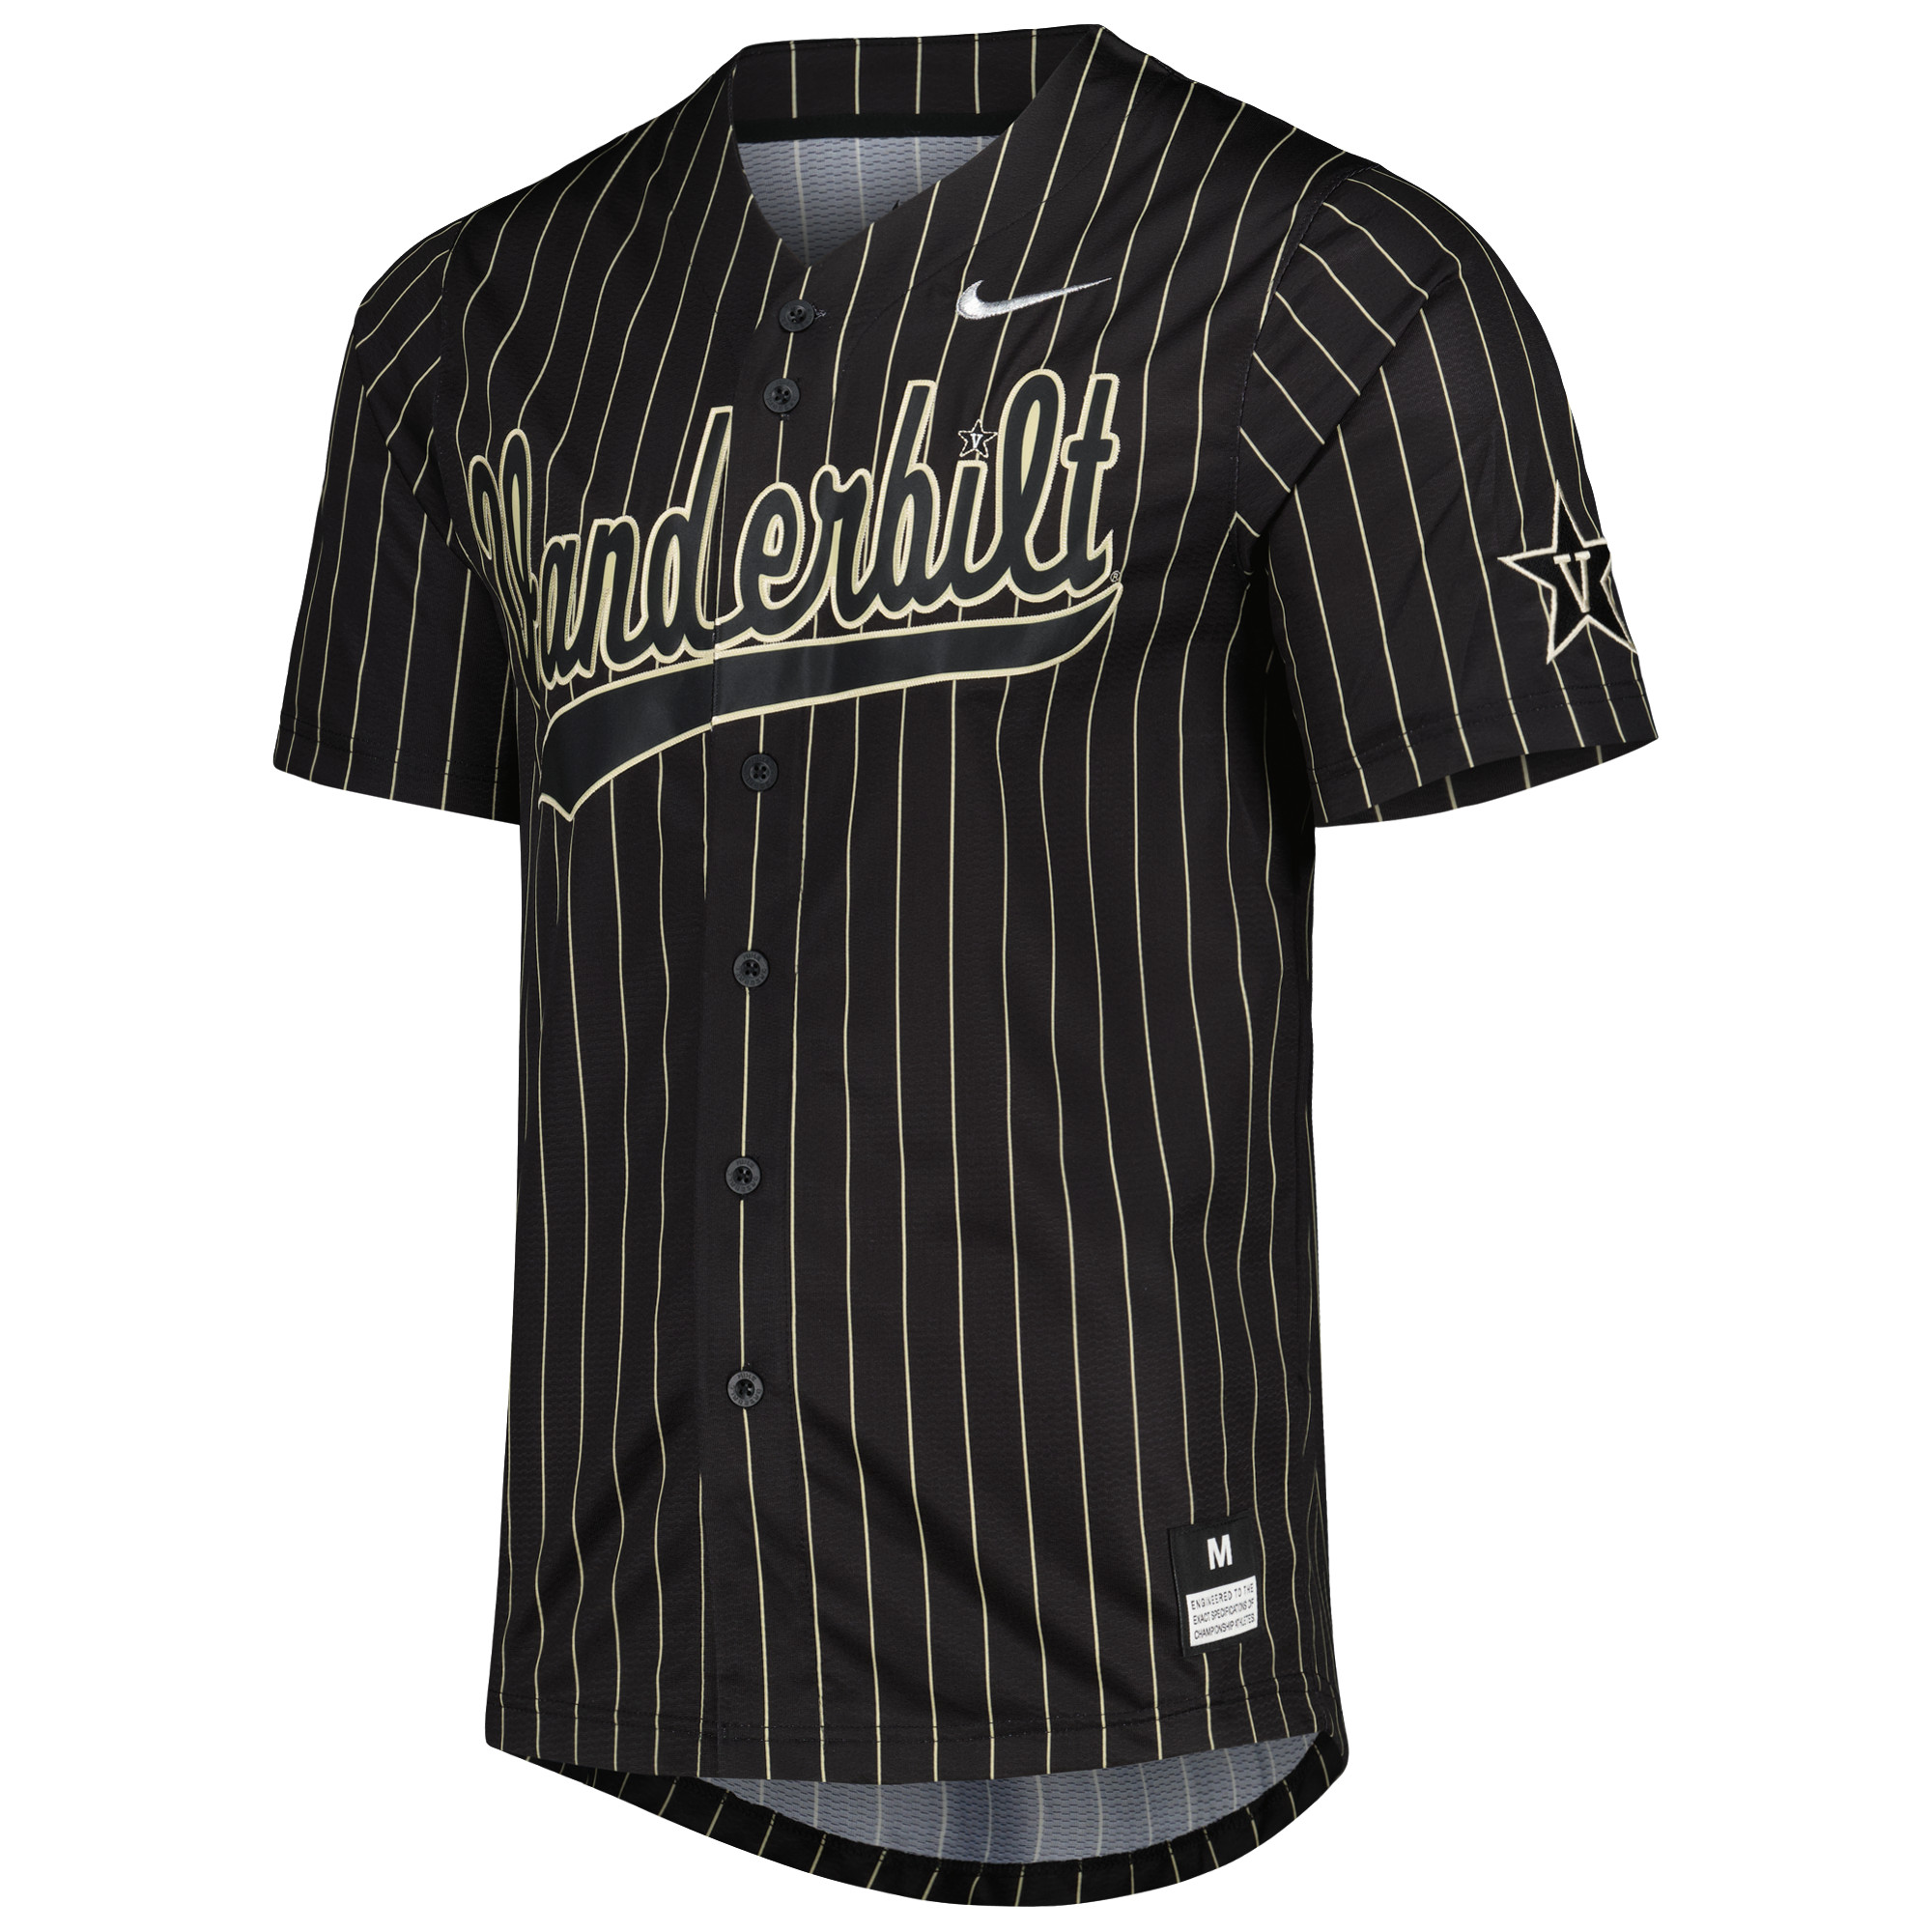 Men's Nike Black/Gold Vanderbilt Commodores Pinstripe Replica Full-Button Baseball Jersey - image 2 of 3